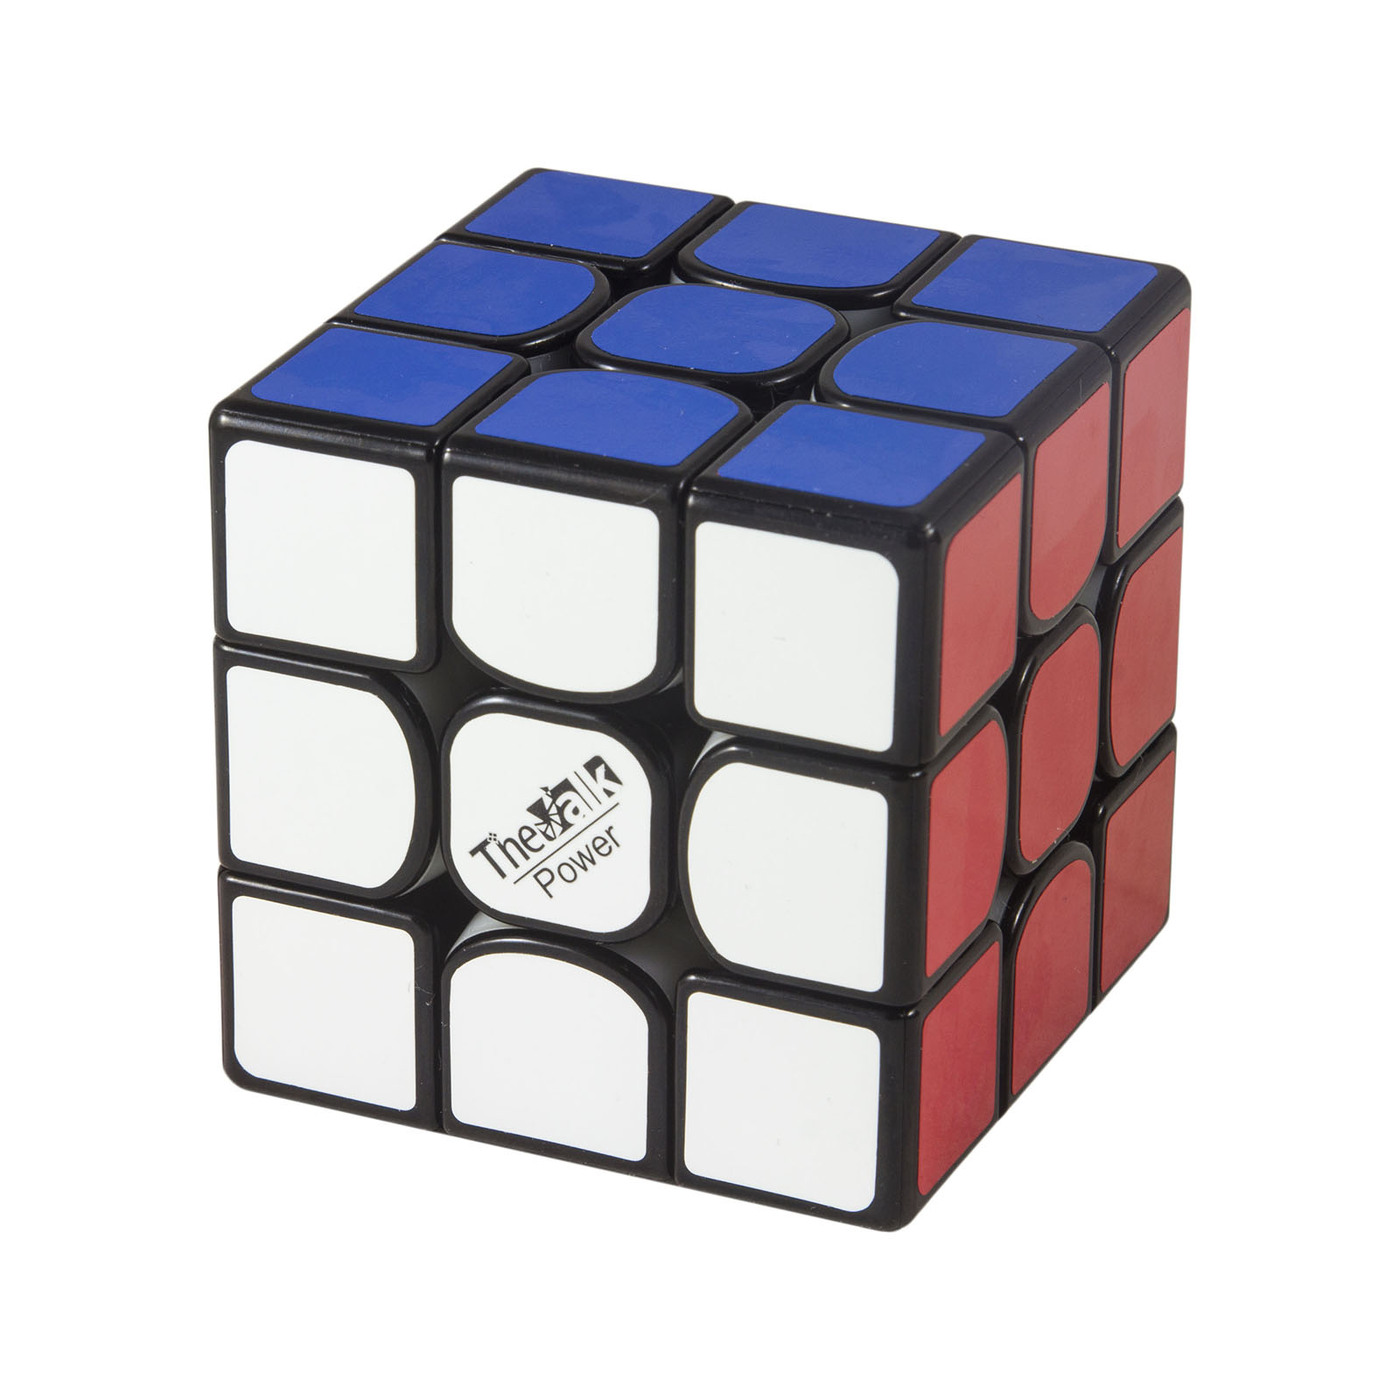 Парк головоломок. Кубик 3х3х3 616. Giker i3s кубик. Кубик 3*3 (а1114в200). Кубик Рубика 17 на 17.